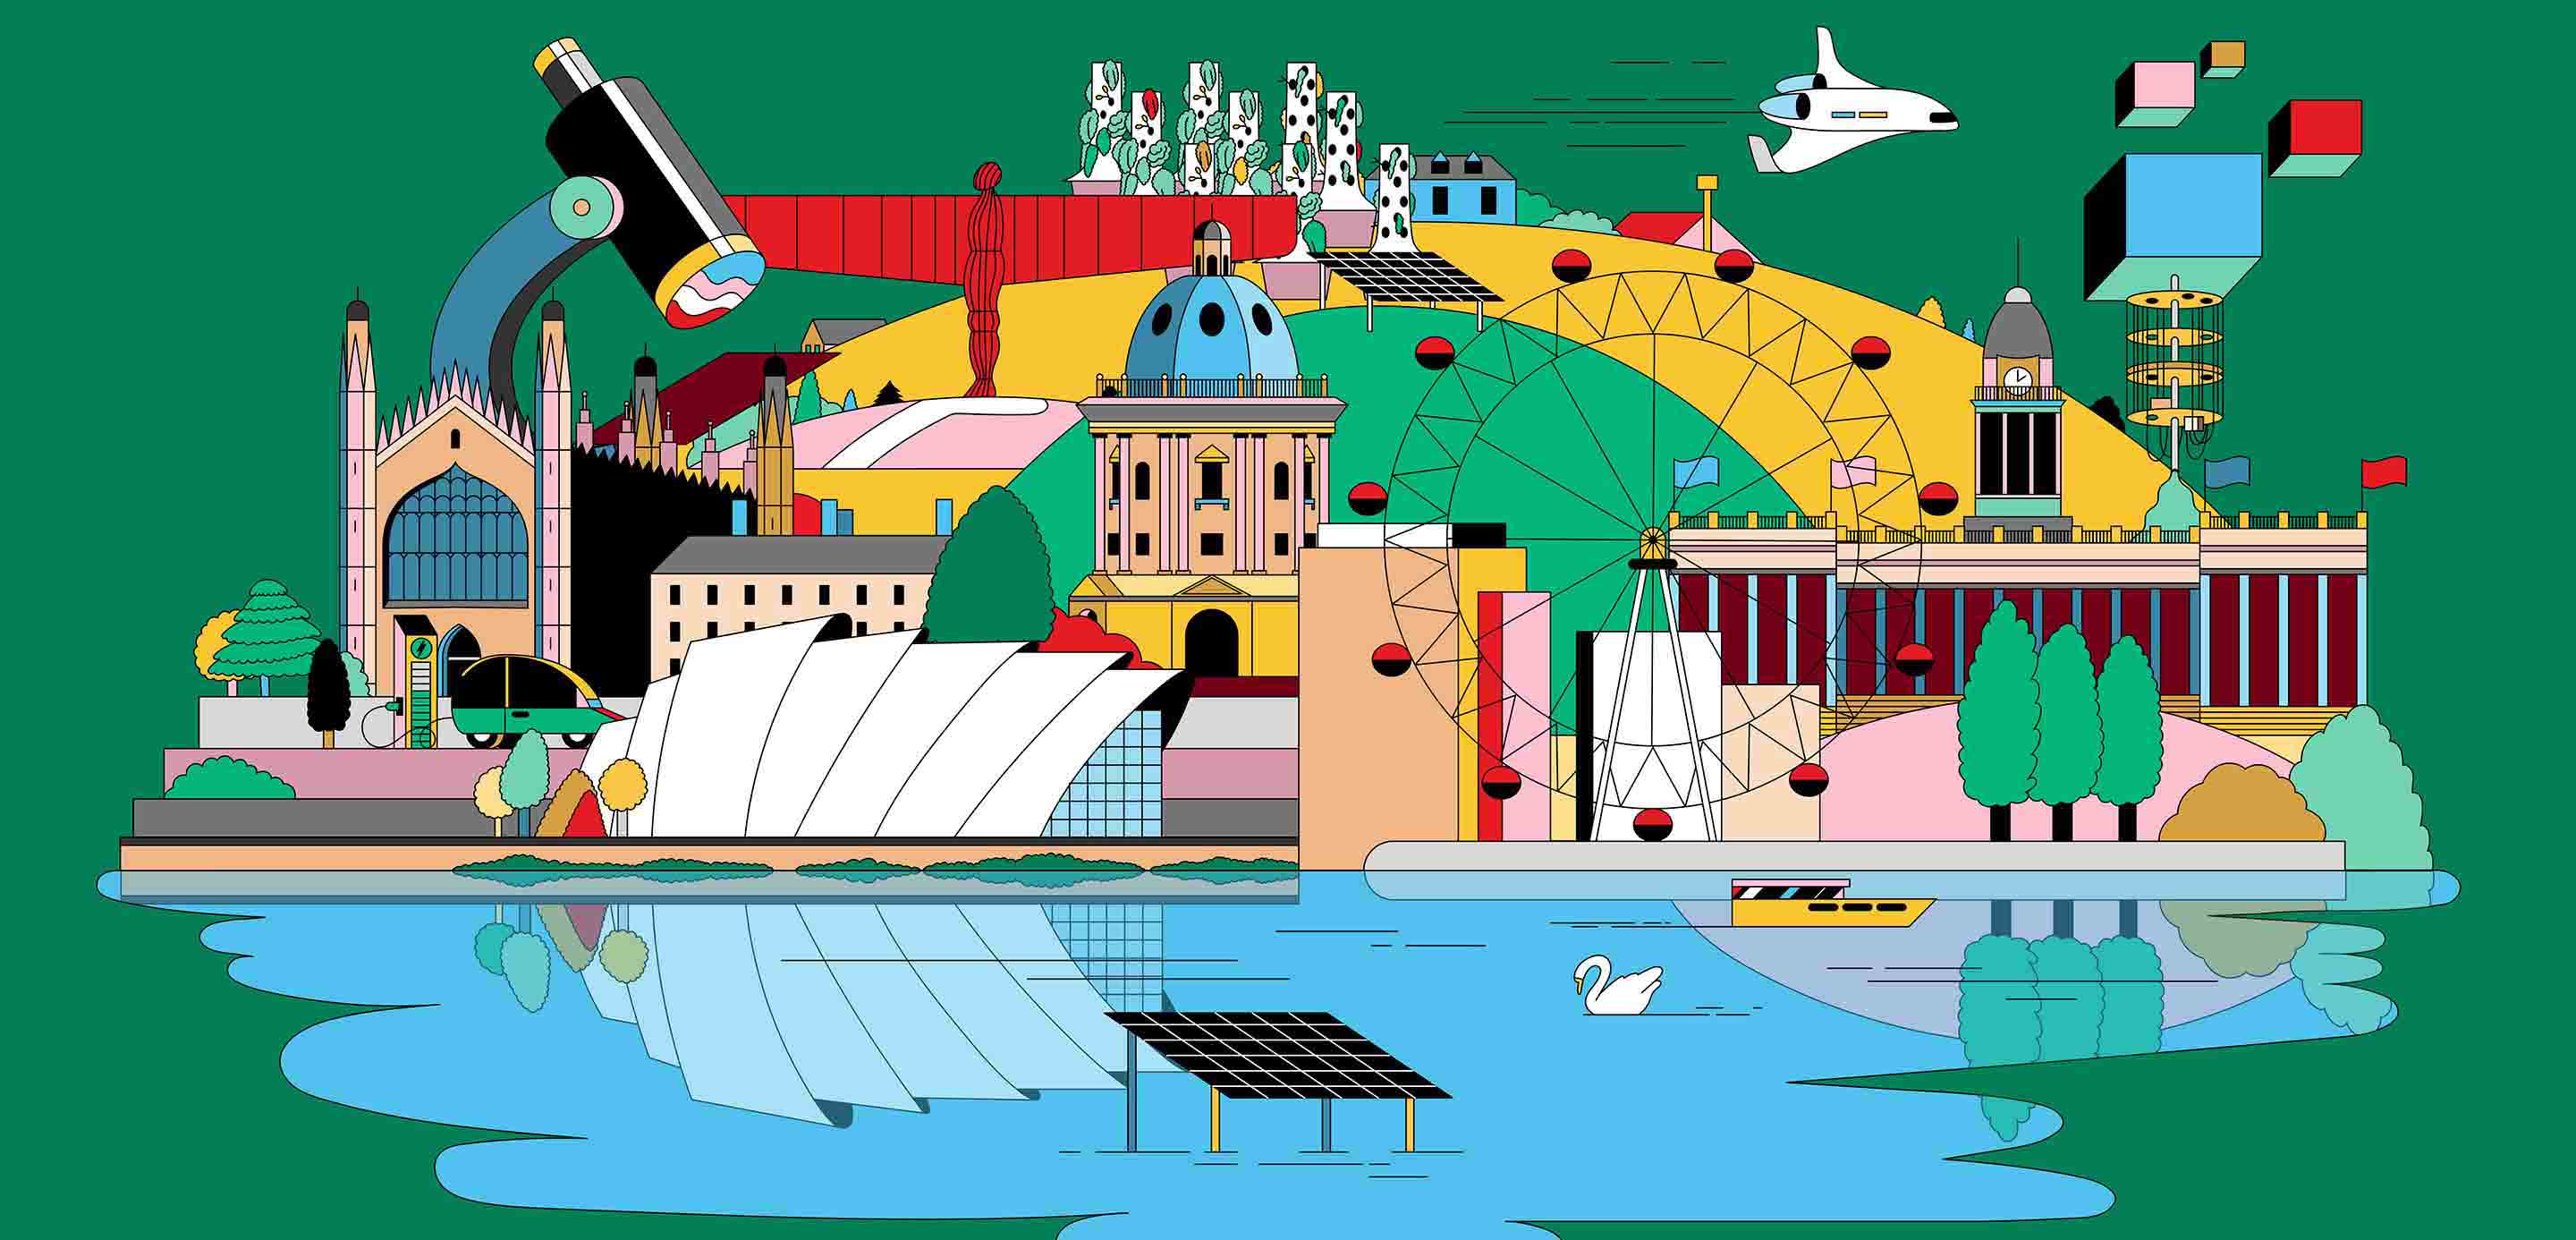 Colourful illustration depicting city landmarks